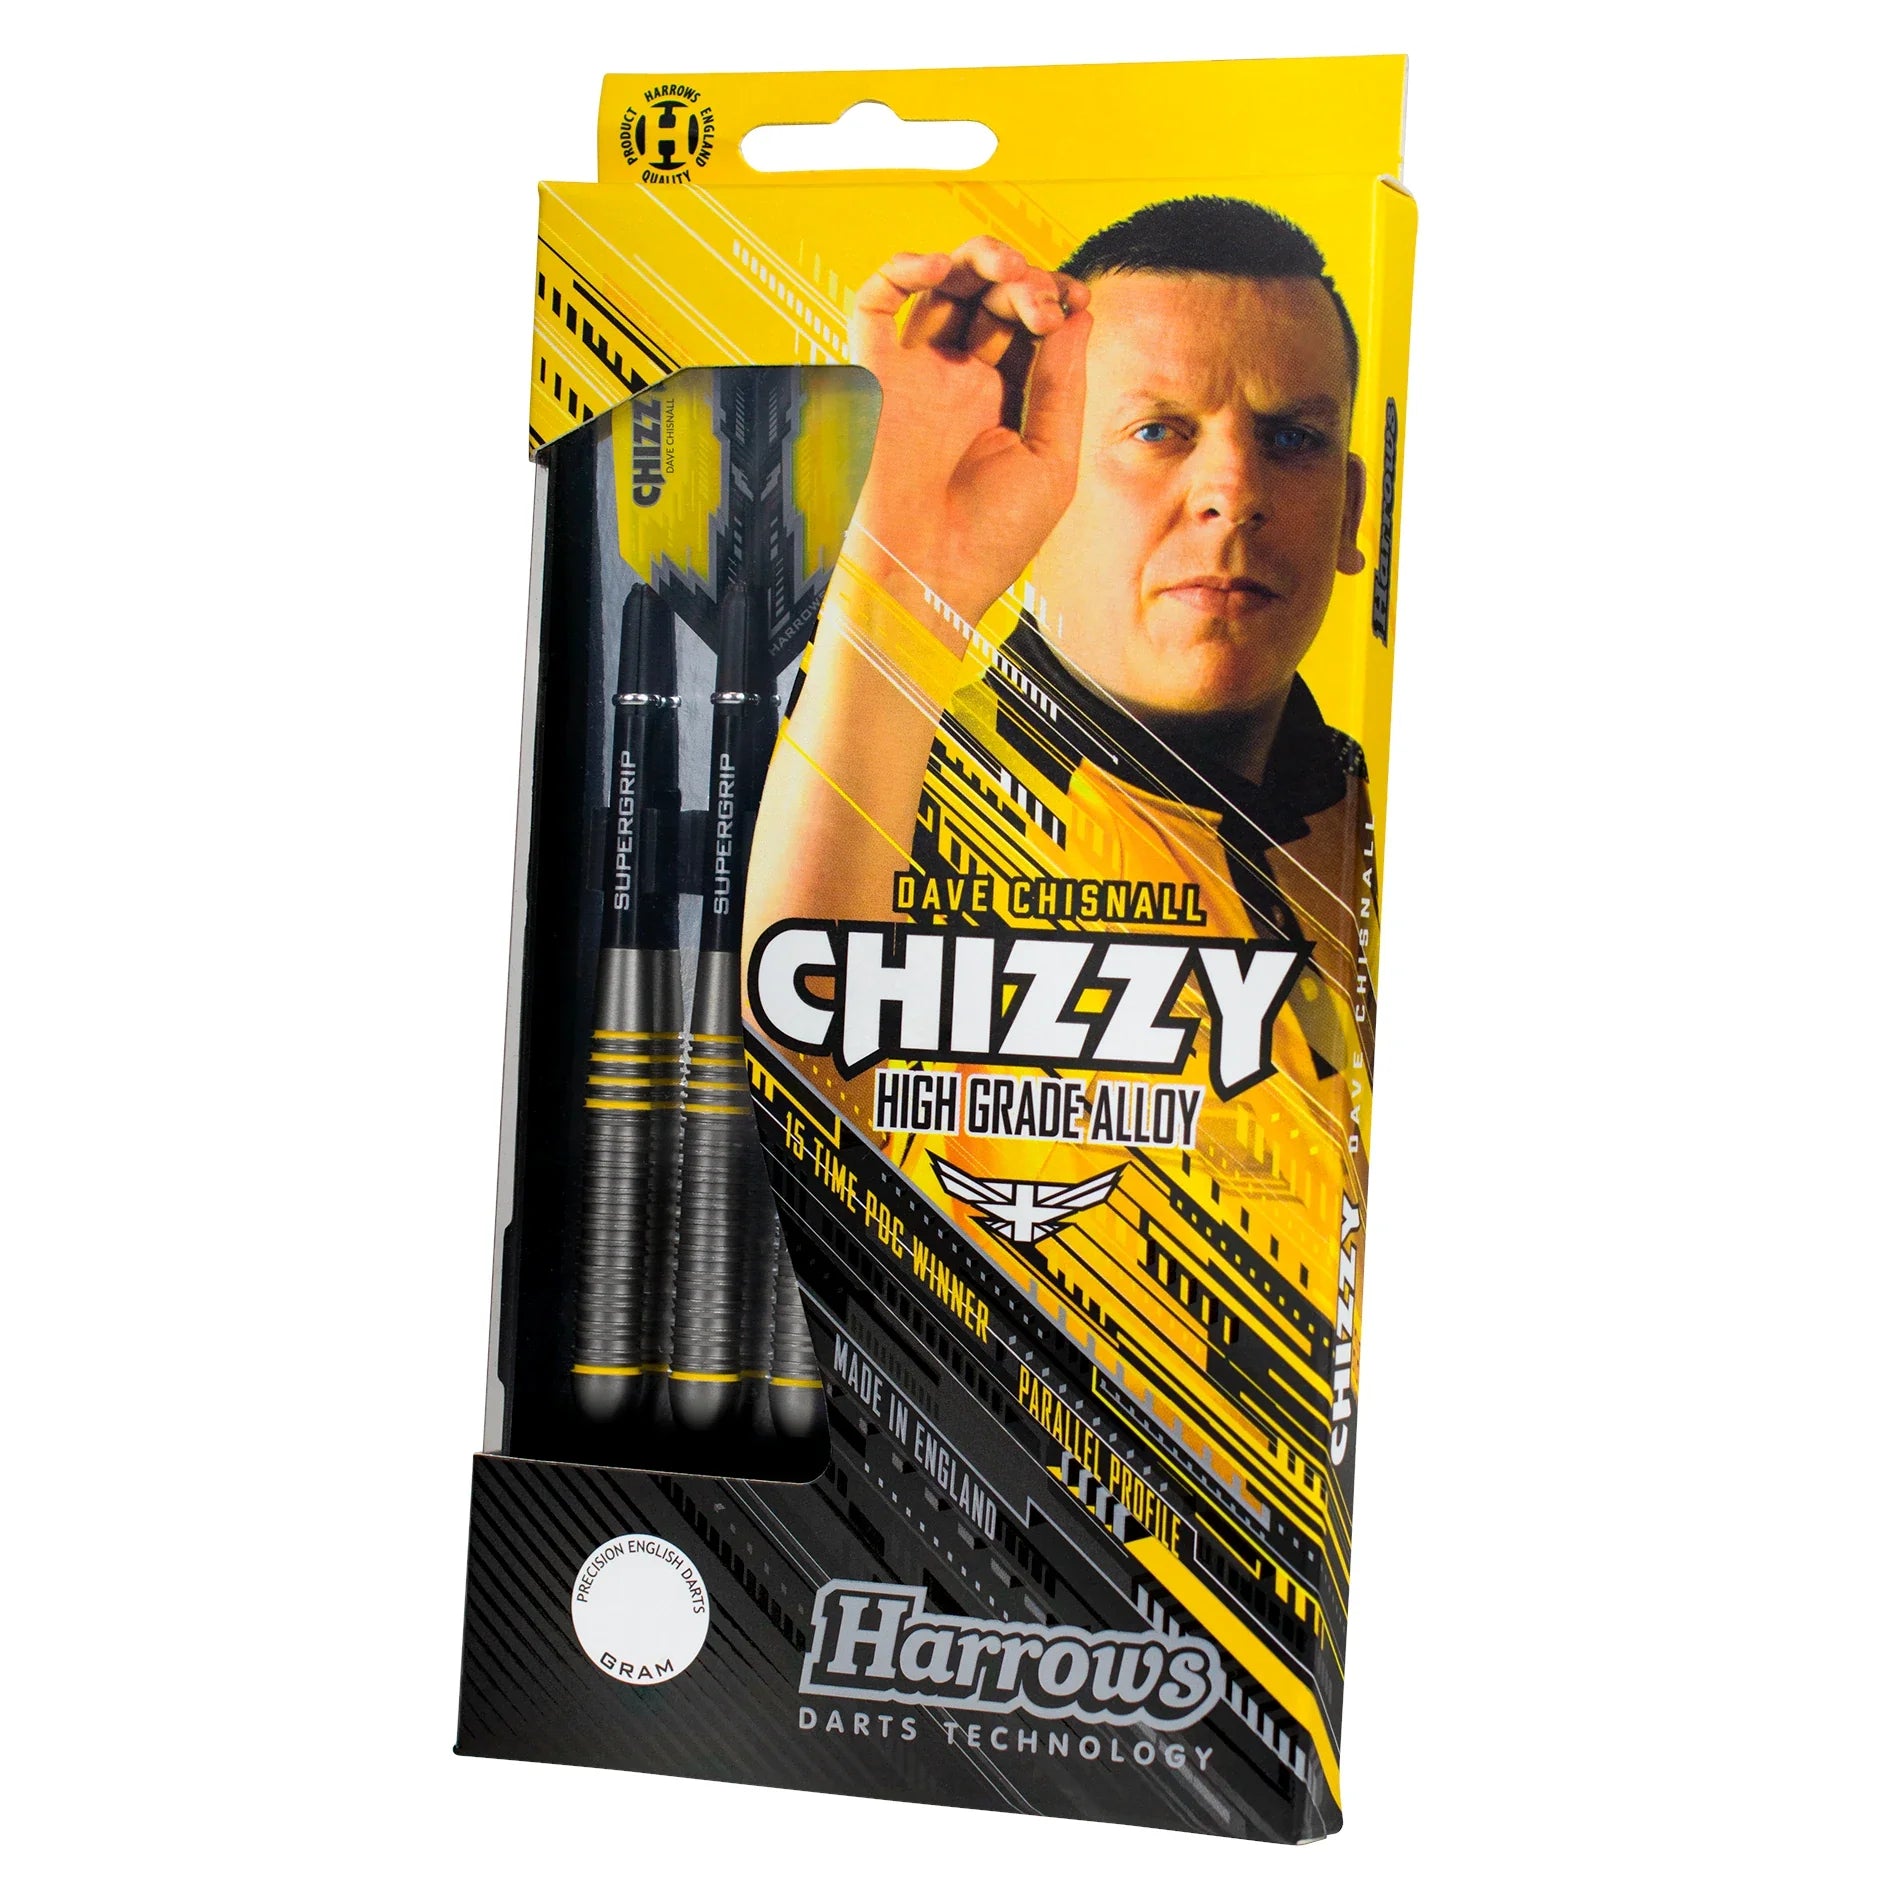 Harrows Chizzy High Grade Alloy 21g Darts